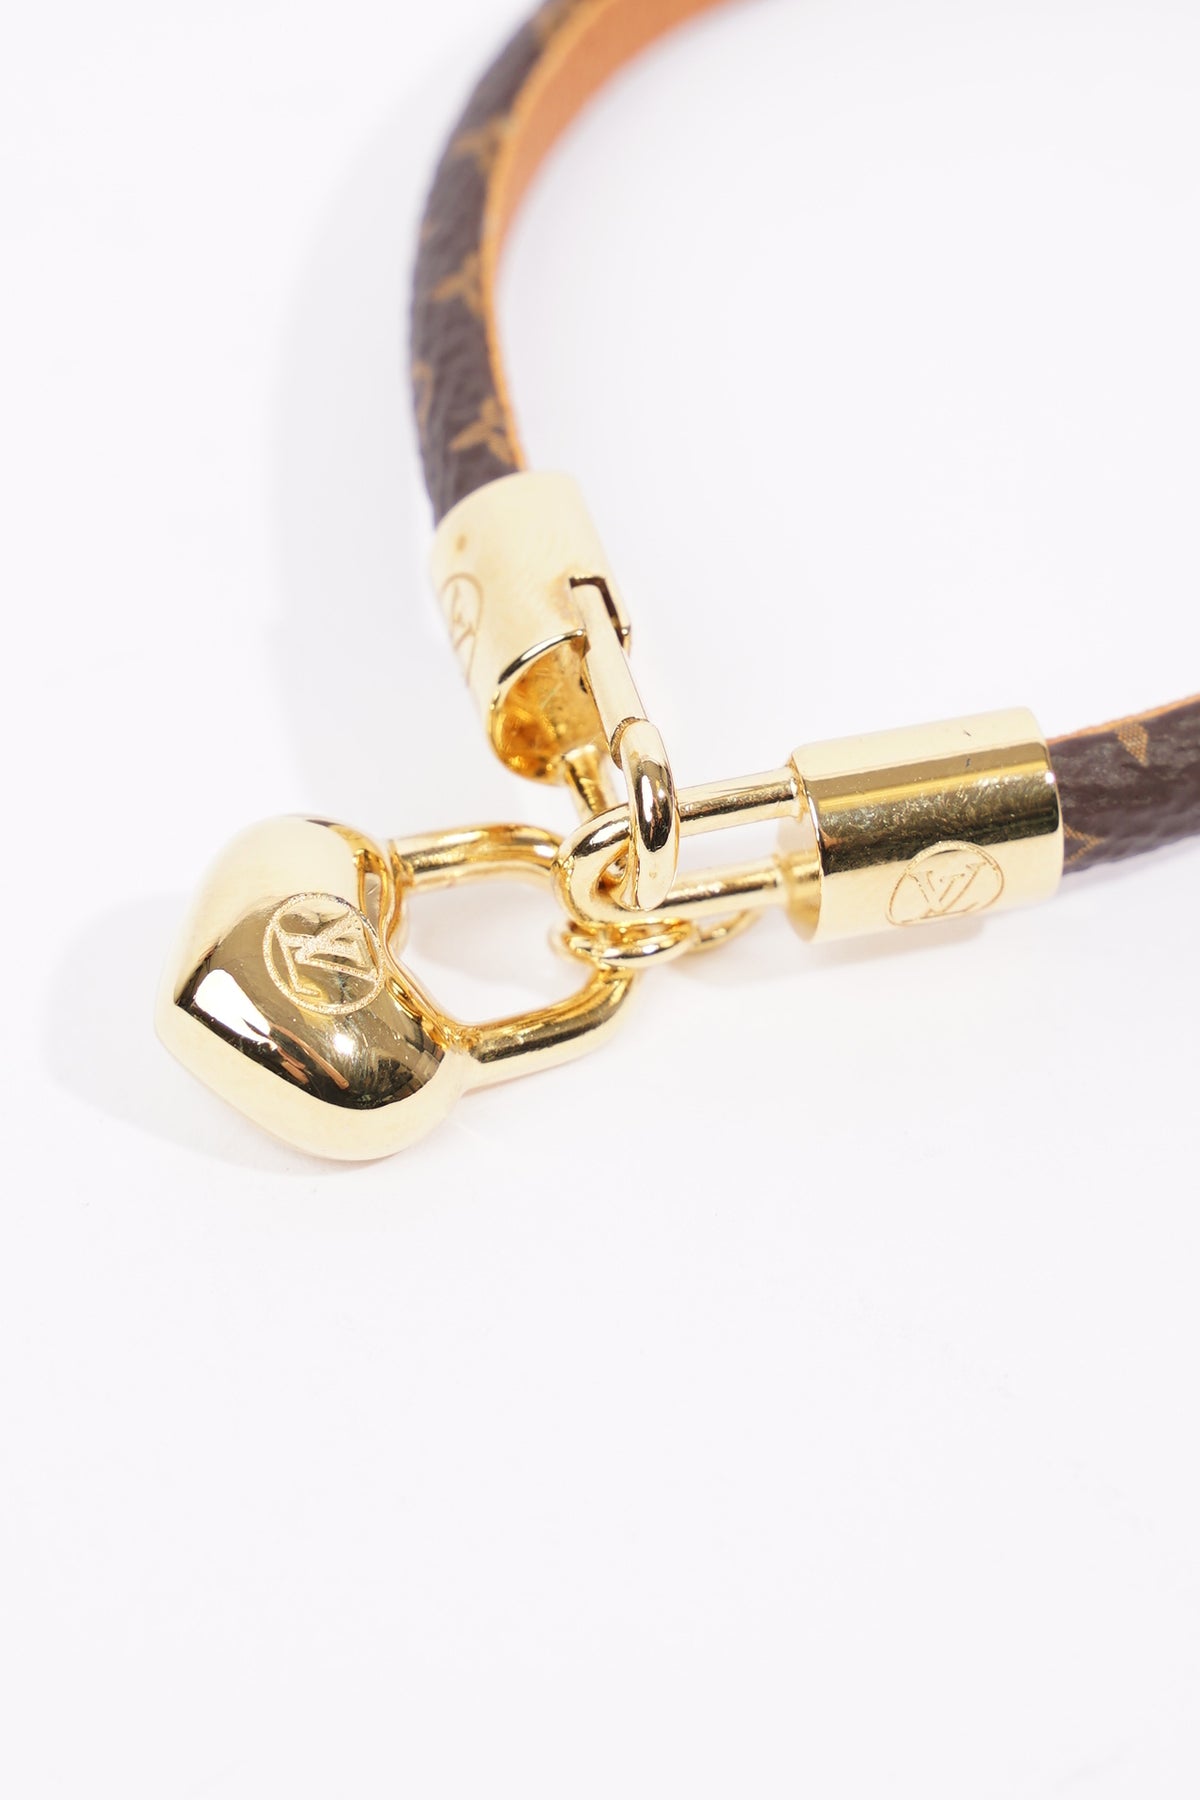 Louis Vuitton Womens Crazy In Lock Bracelet Monogram / Gold 19